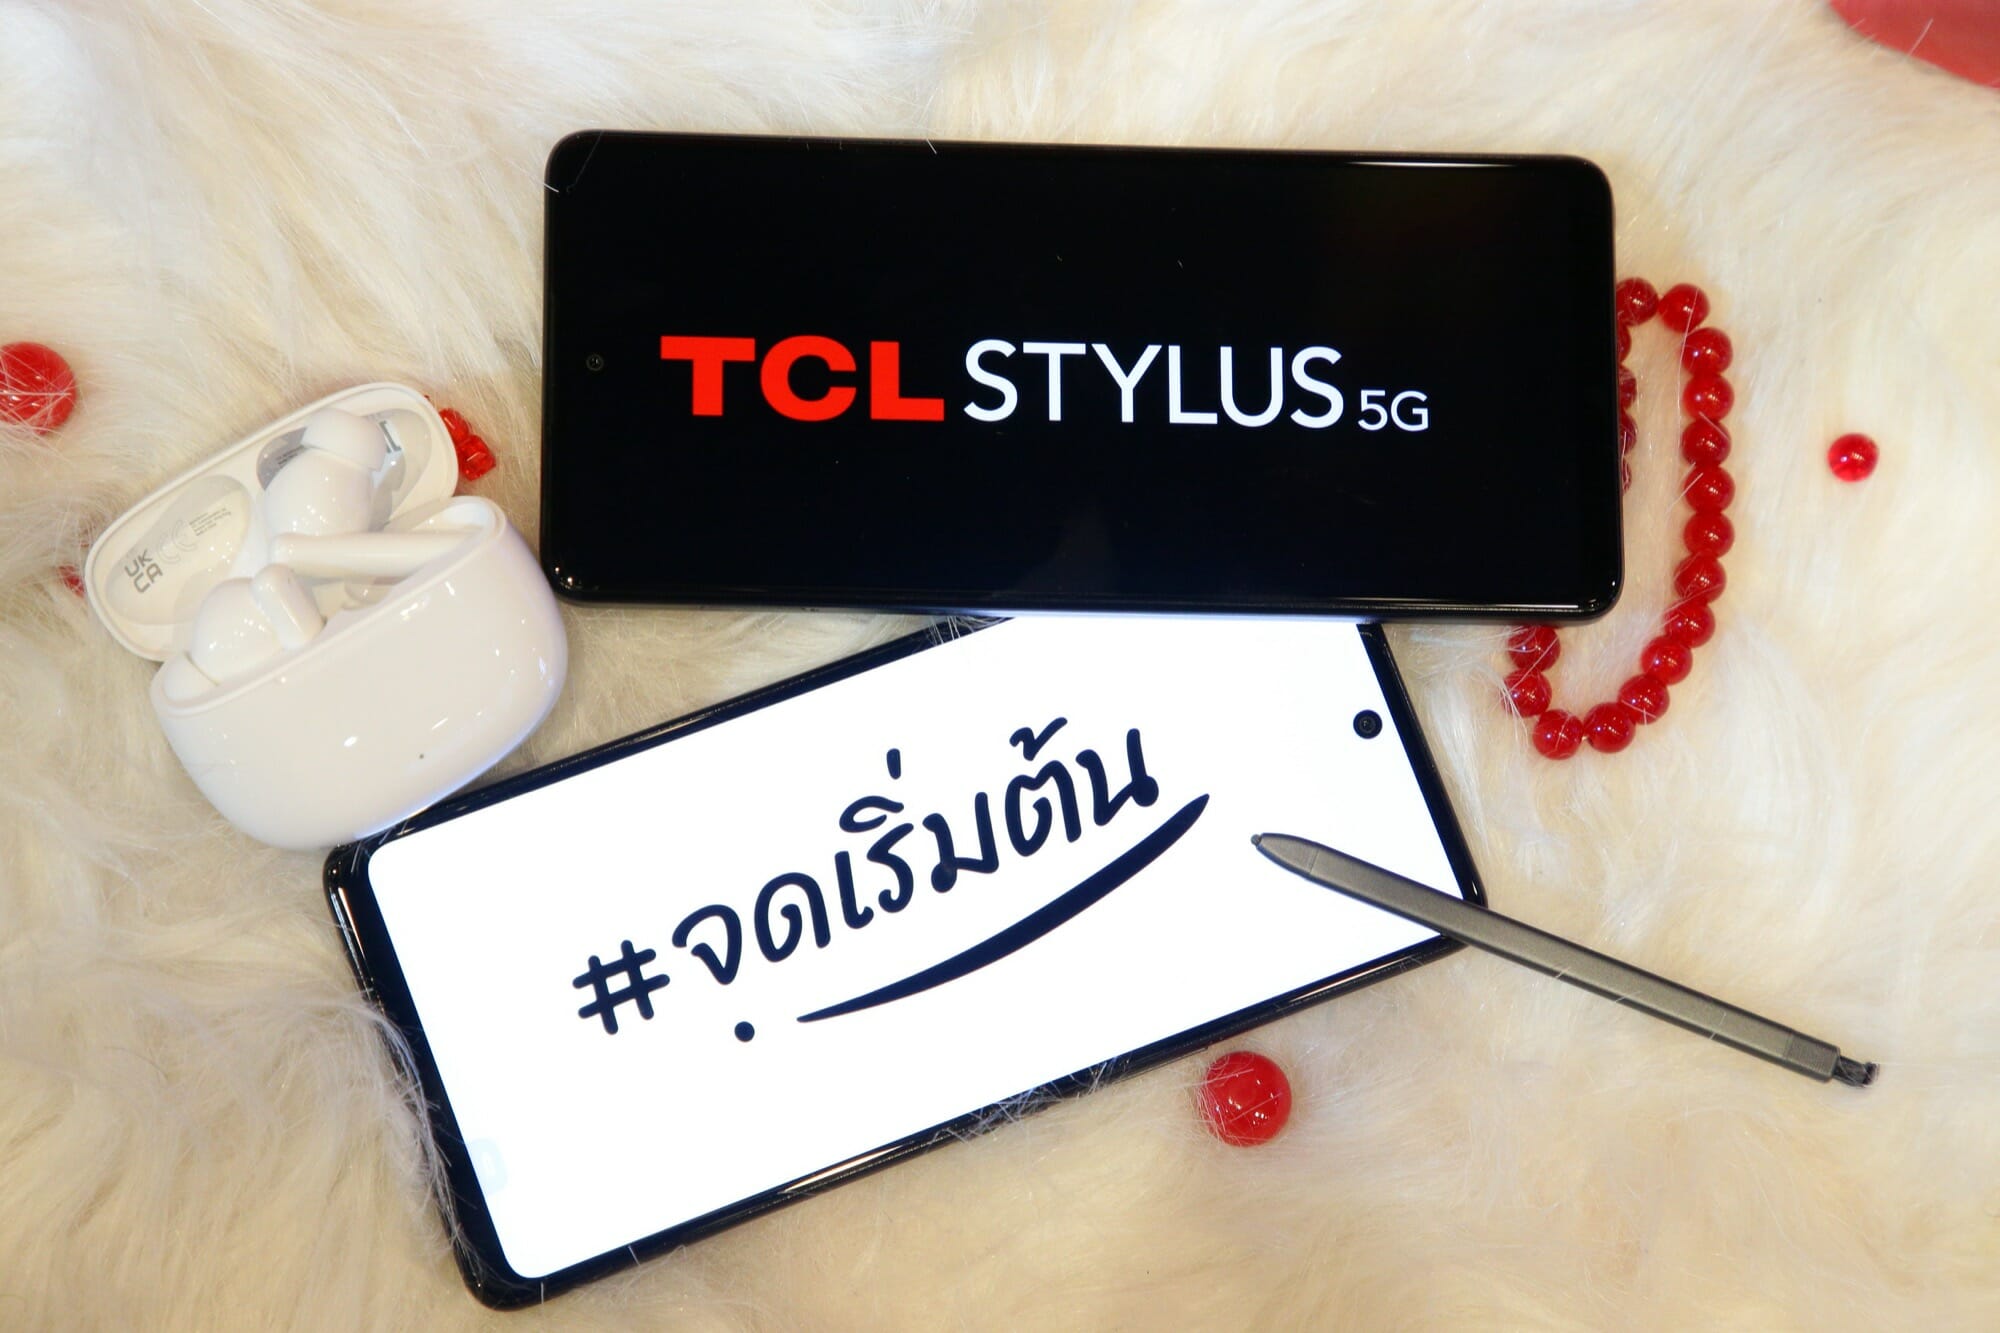 TCL เปิดตัว “TCL STYLUS 5G” สมาร์ทโฟนพร้อมปากกาในตัวเครื่อง 10,990 บาท 1